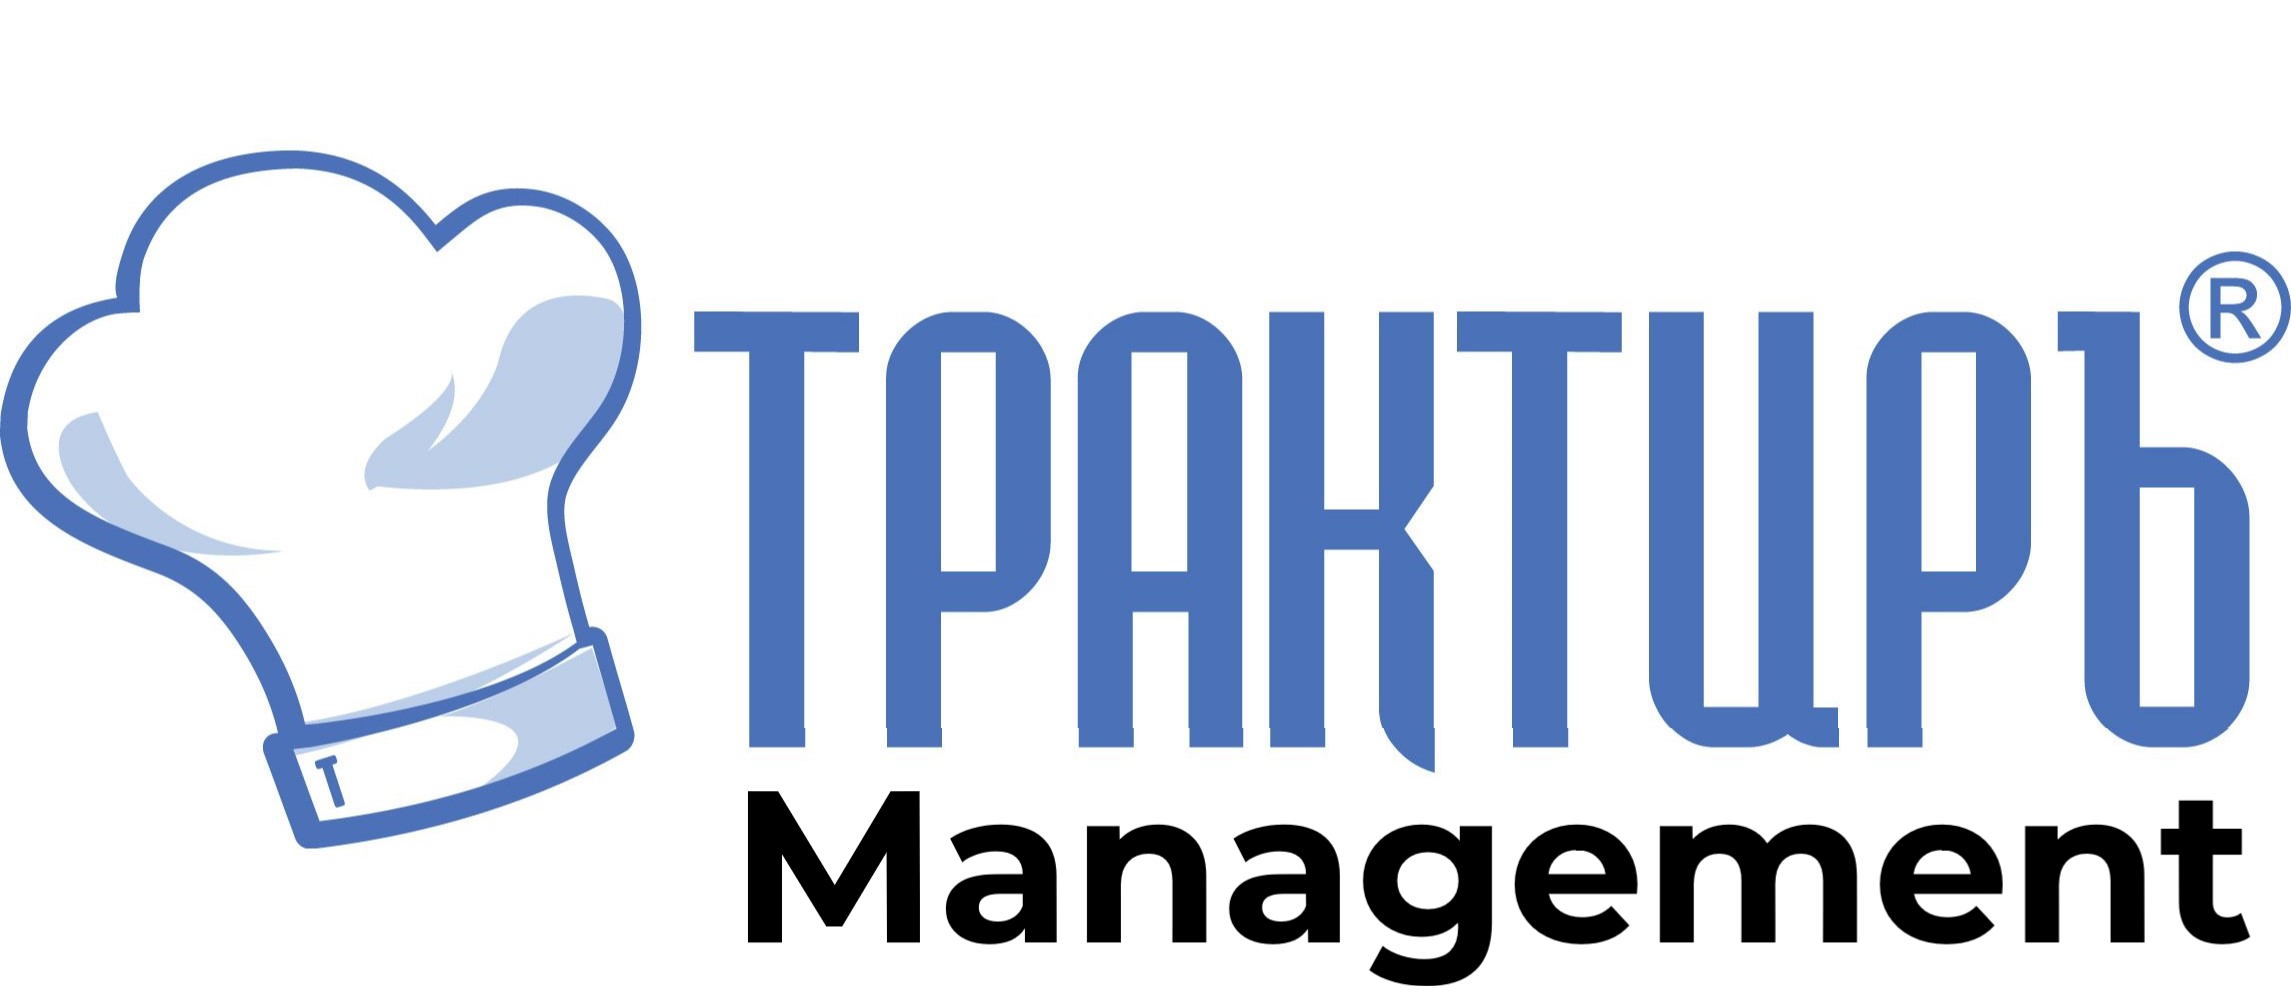 Трактиръ: Management в Новокузнецке